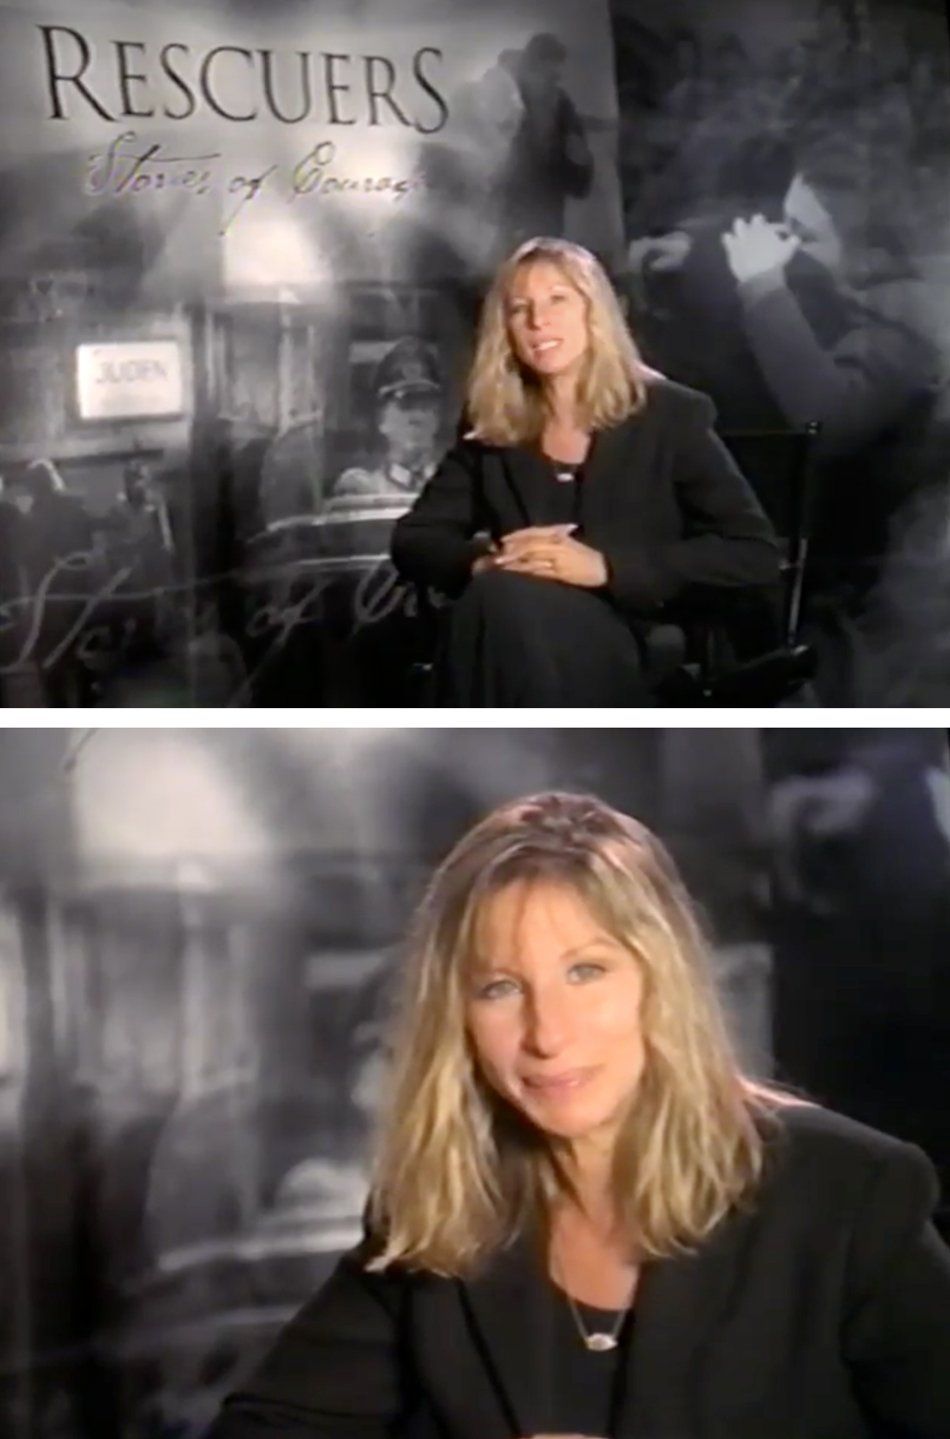 Scenes of Streisand introducing RESCUERS.